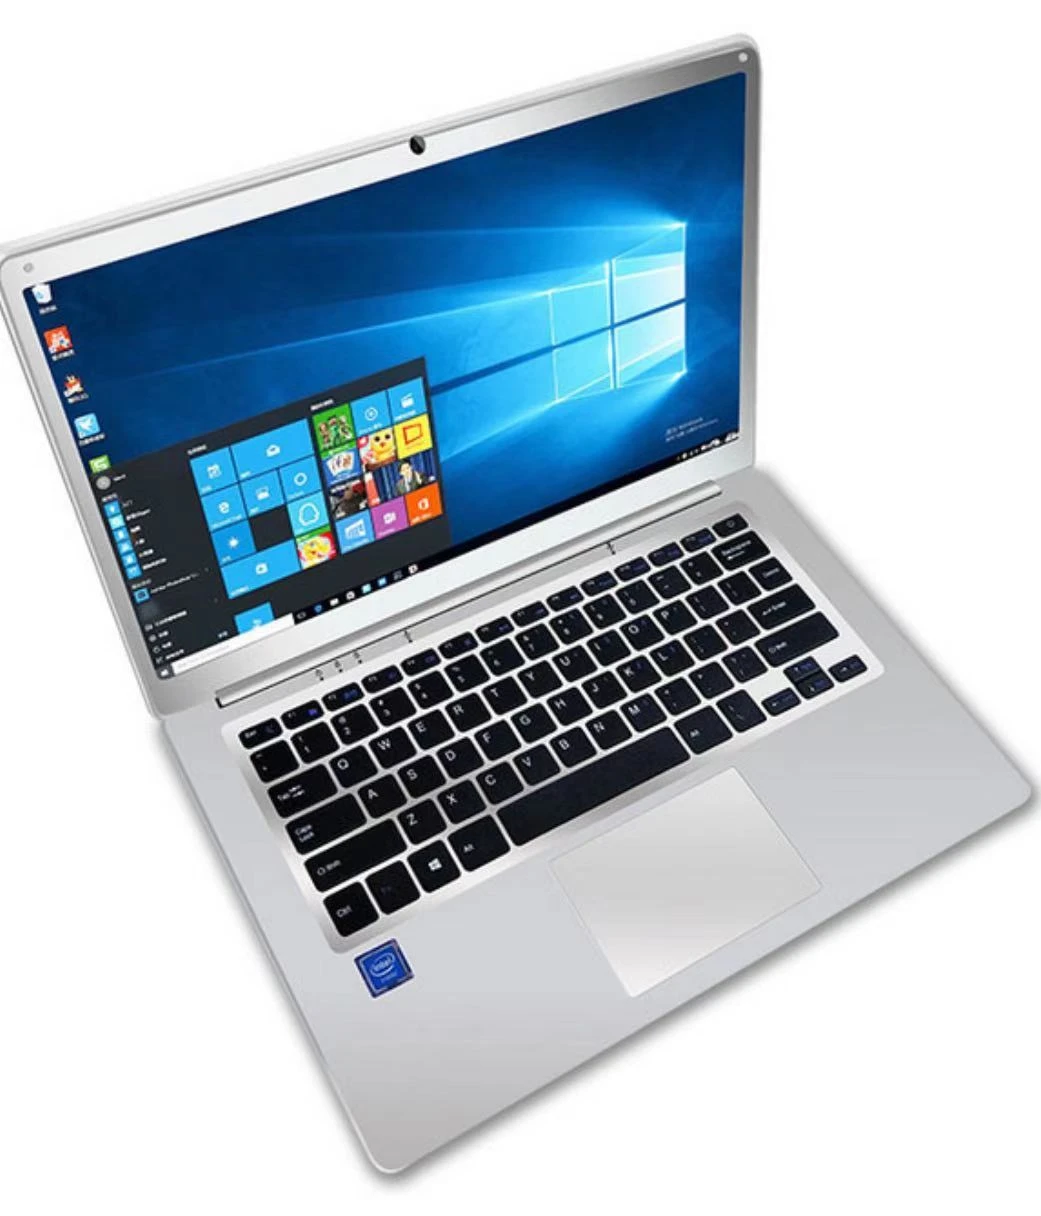 

Notebook F141 Laptop 14.1 inch Intel J4115 Quad Core 1920 x 1080 8GB RAM 256GB SSD Win 10 Ultra Thin Notebook laptops, Silver